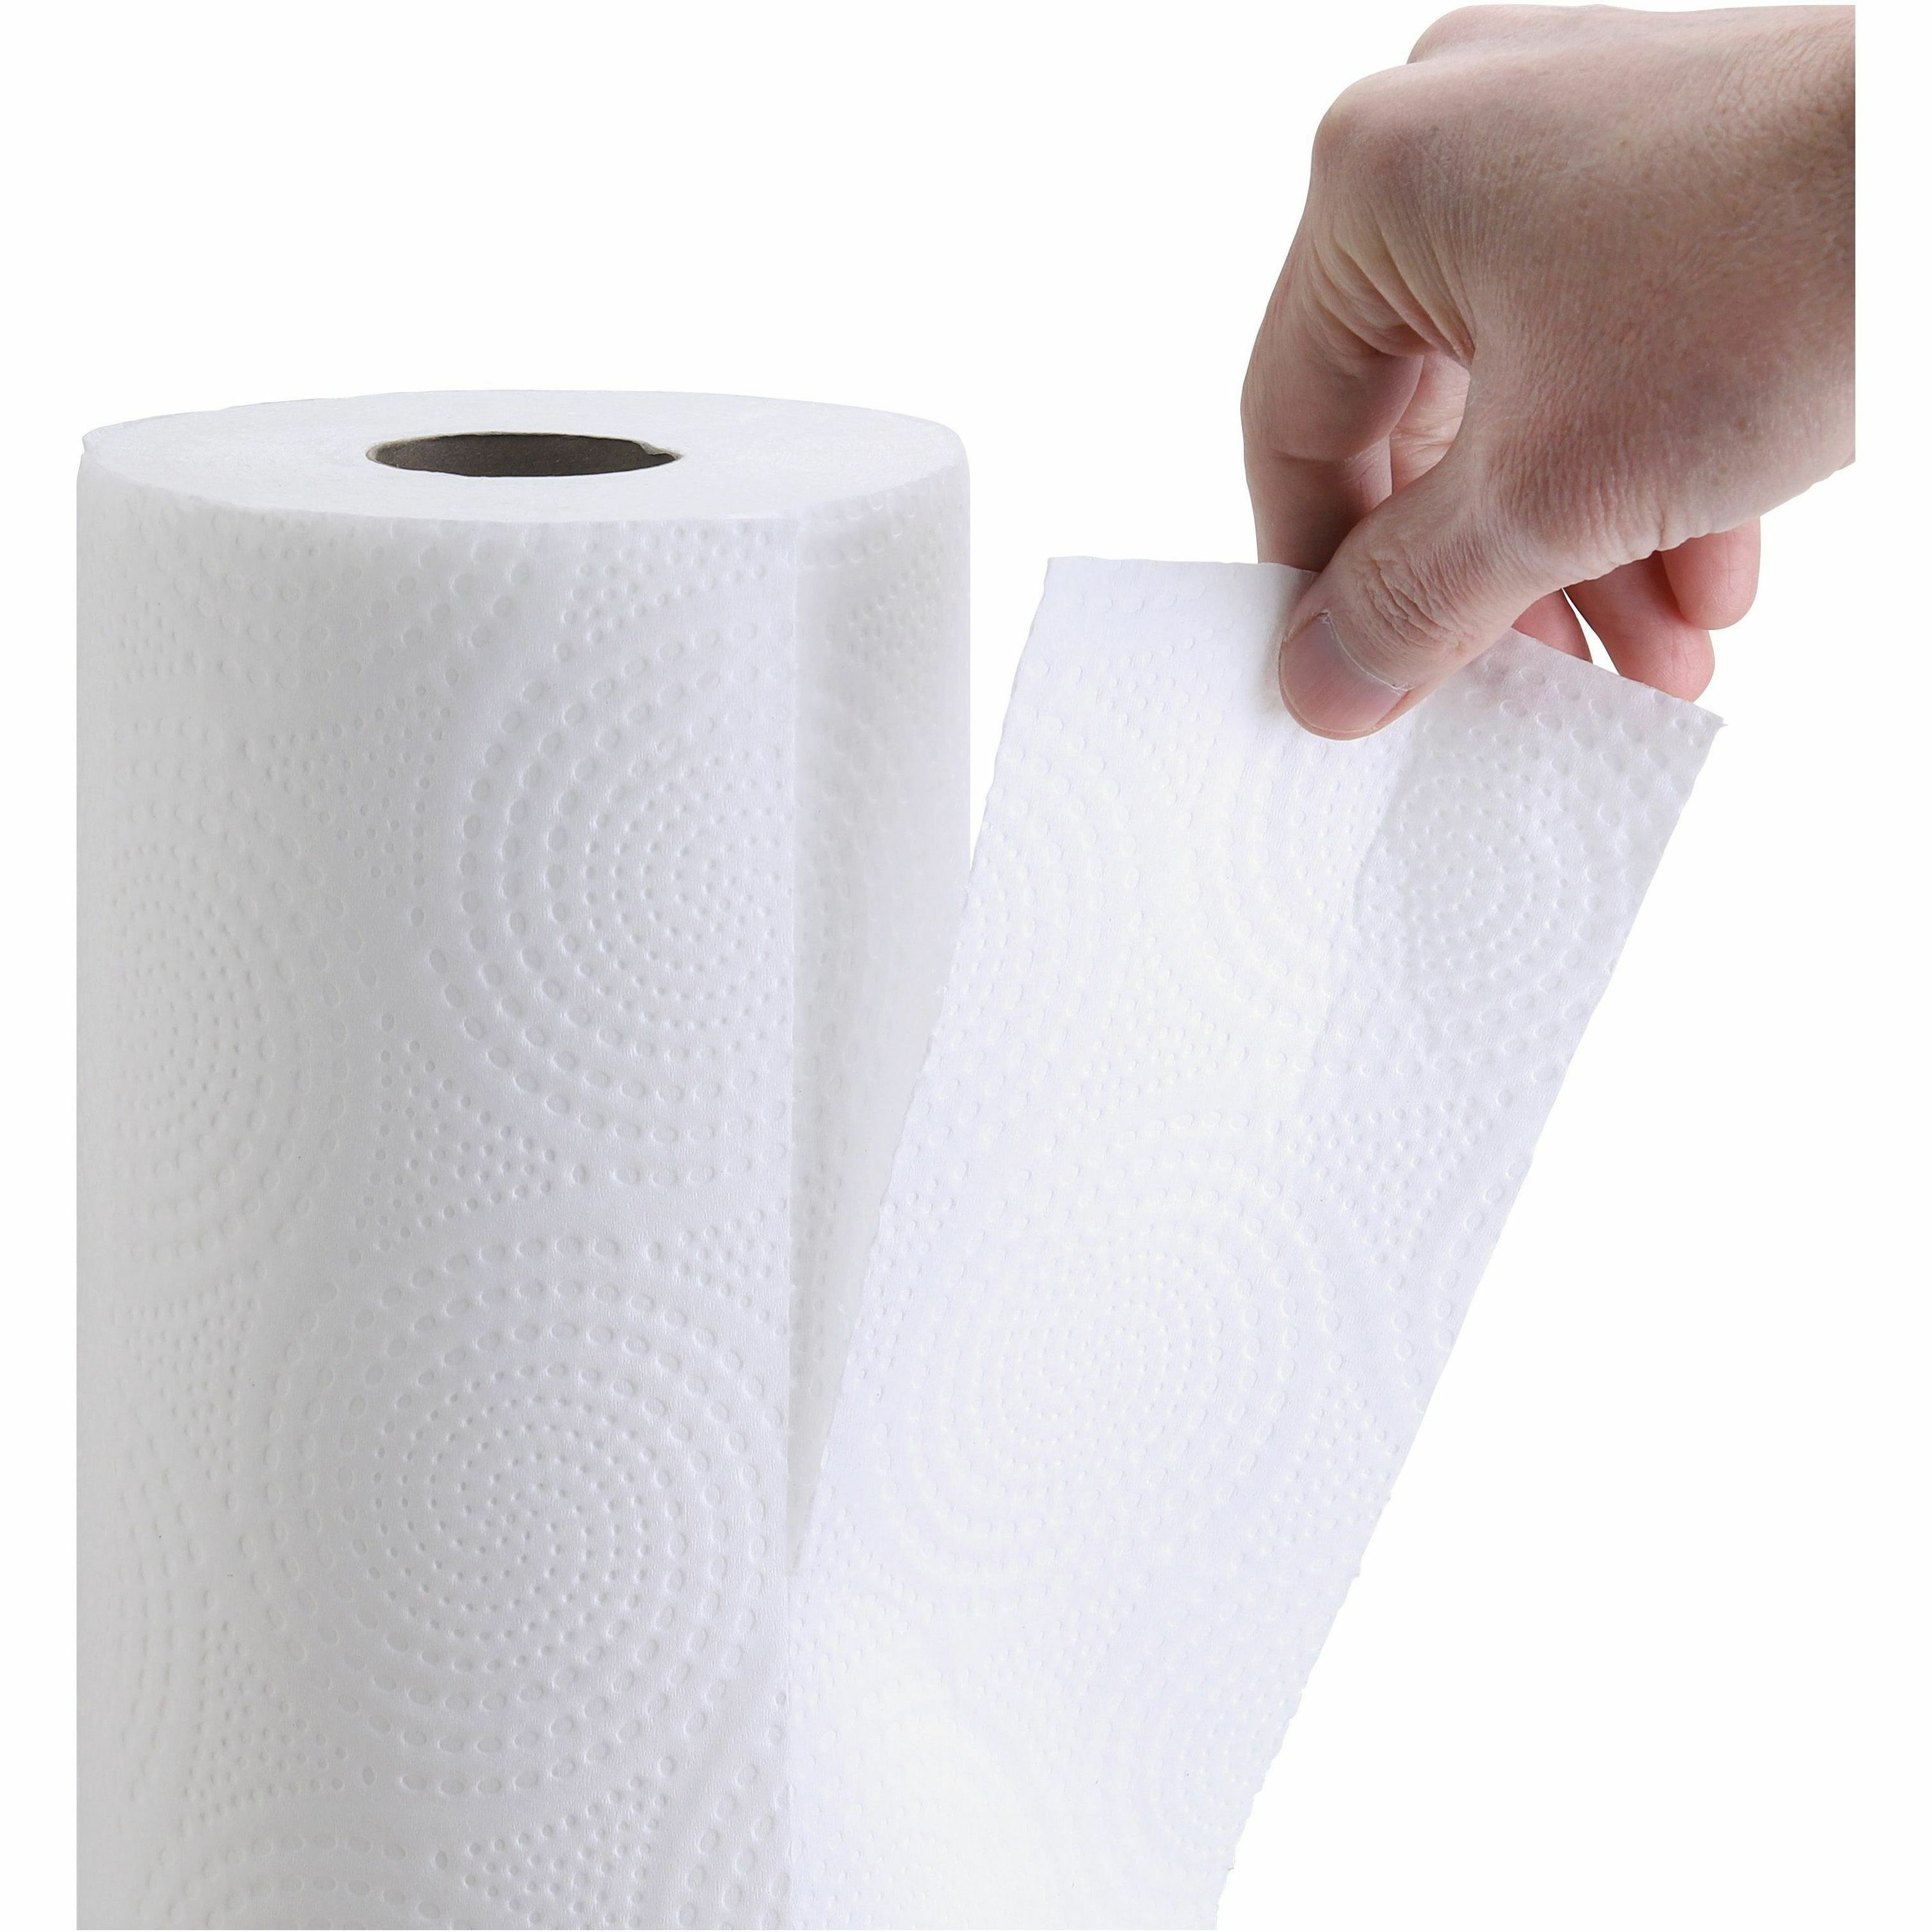 Basics 2-Ply Paper Towels, Flex-Sheets, 150 Sheets per Roll, 12 Rolls (2 Packs of 6), White